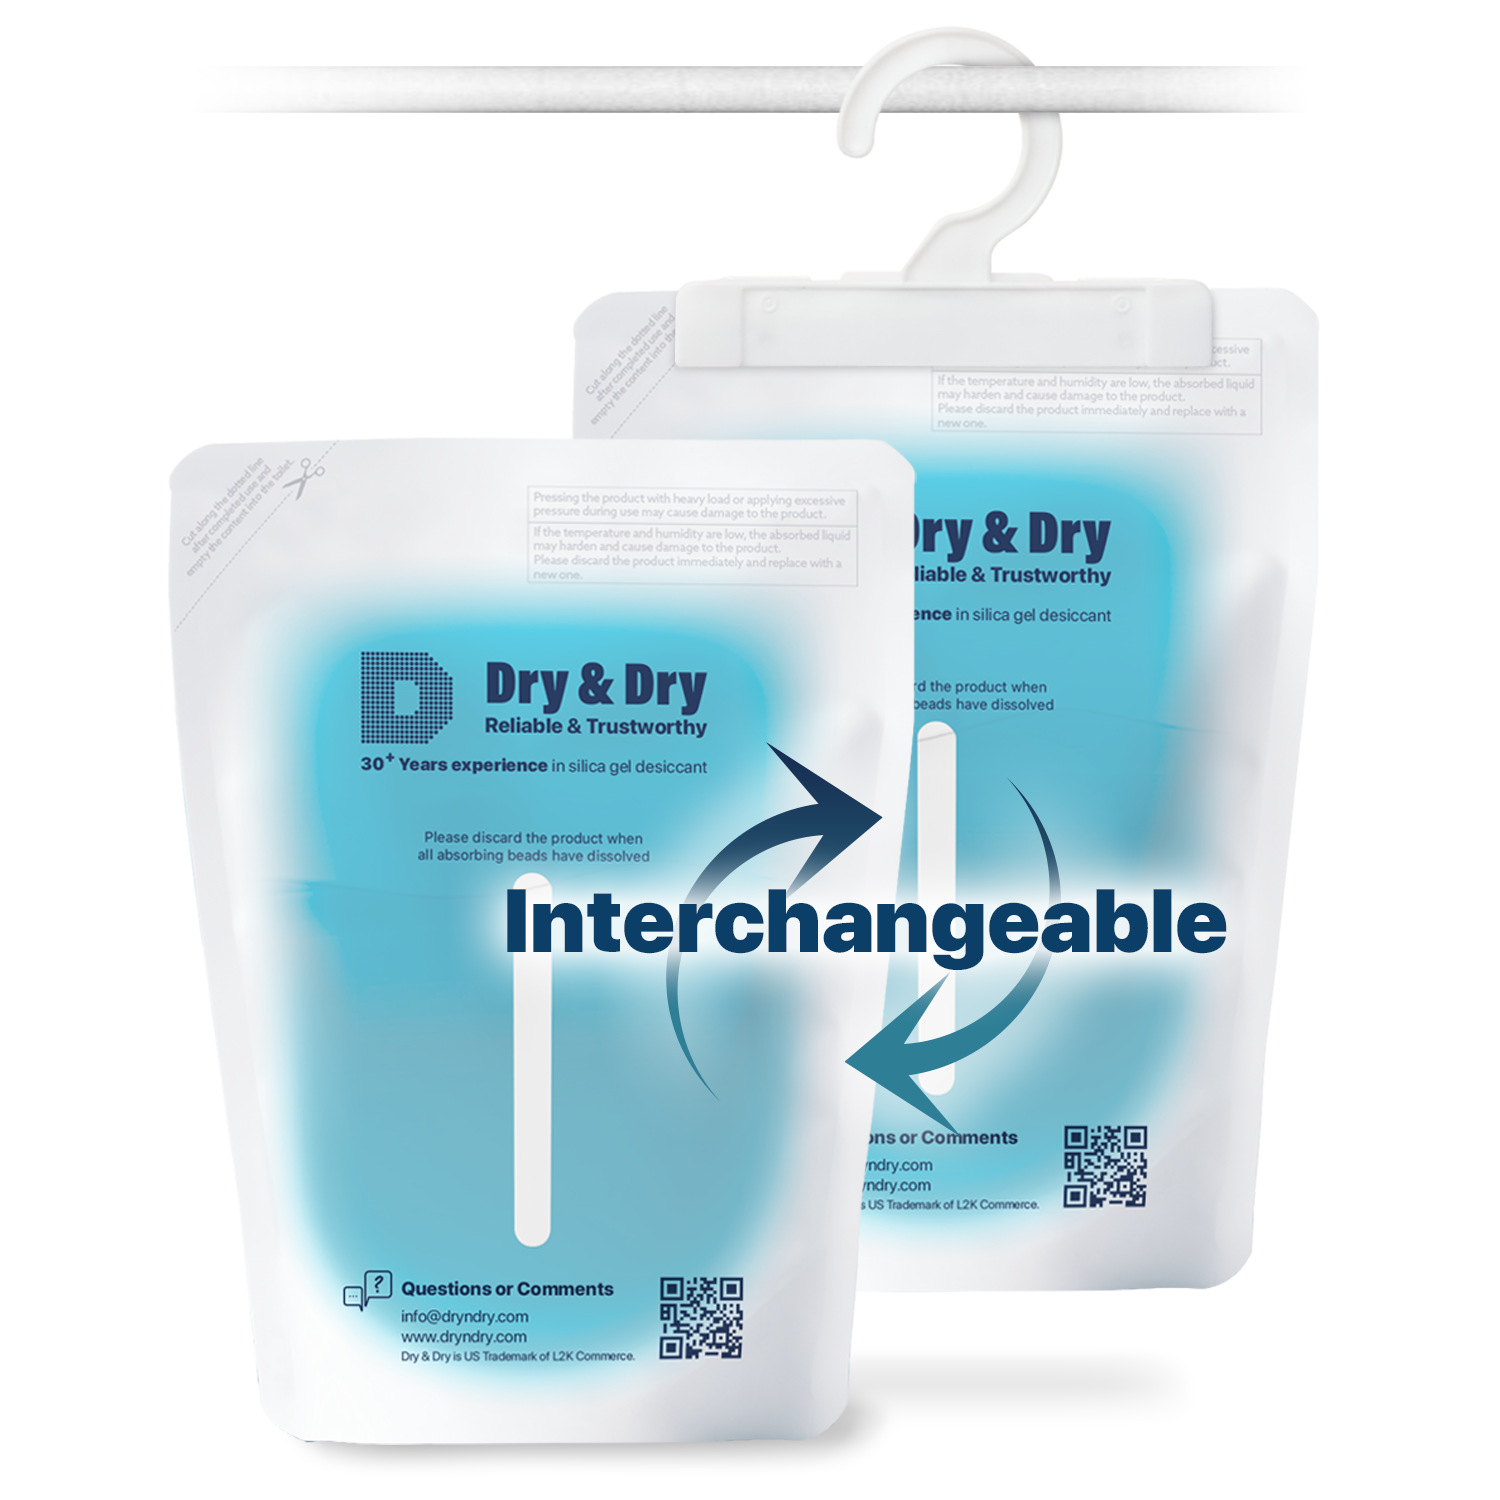 Dry & Dry 12 Packs Premium Standing or Hanging Hybrid Moisture Absorbers